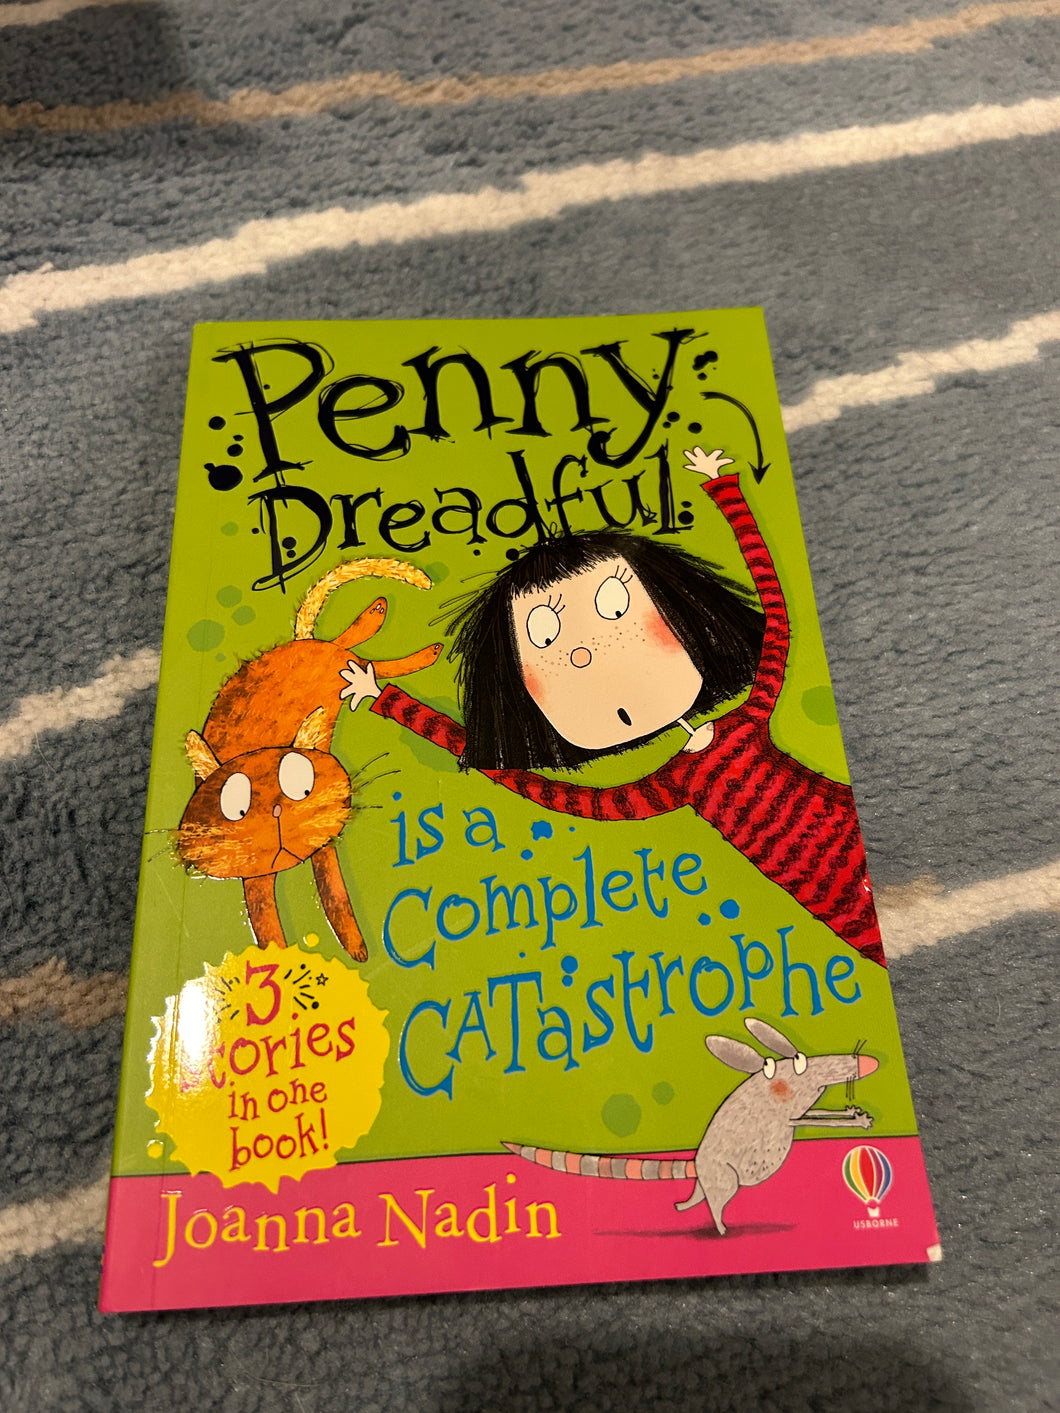 2-pk books, Penny Dreadful (3 stories in 1)